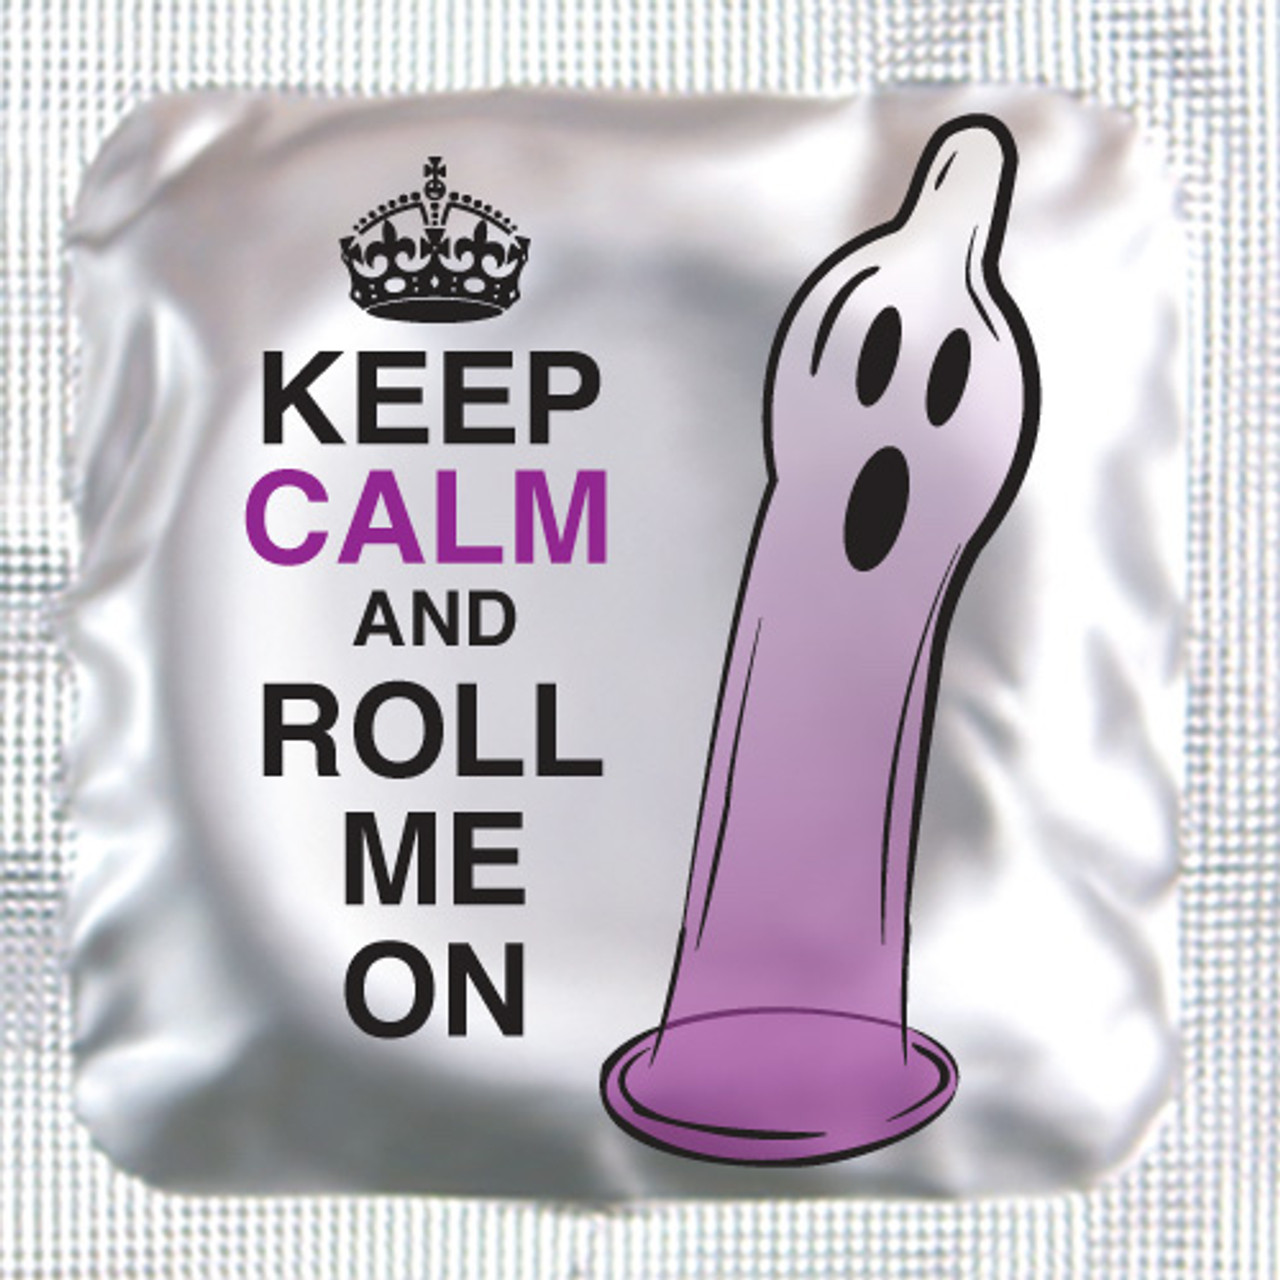 Halloween "Keep Calm and Roll me ON" Lubricated Condom (150/box)